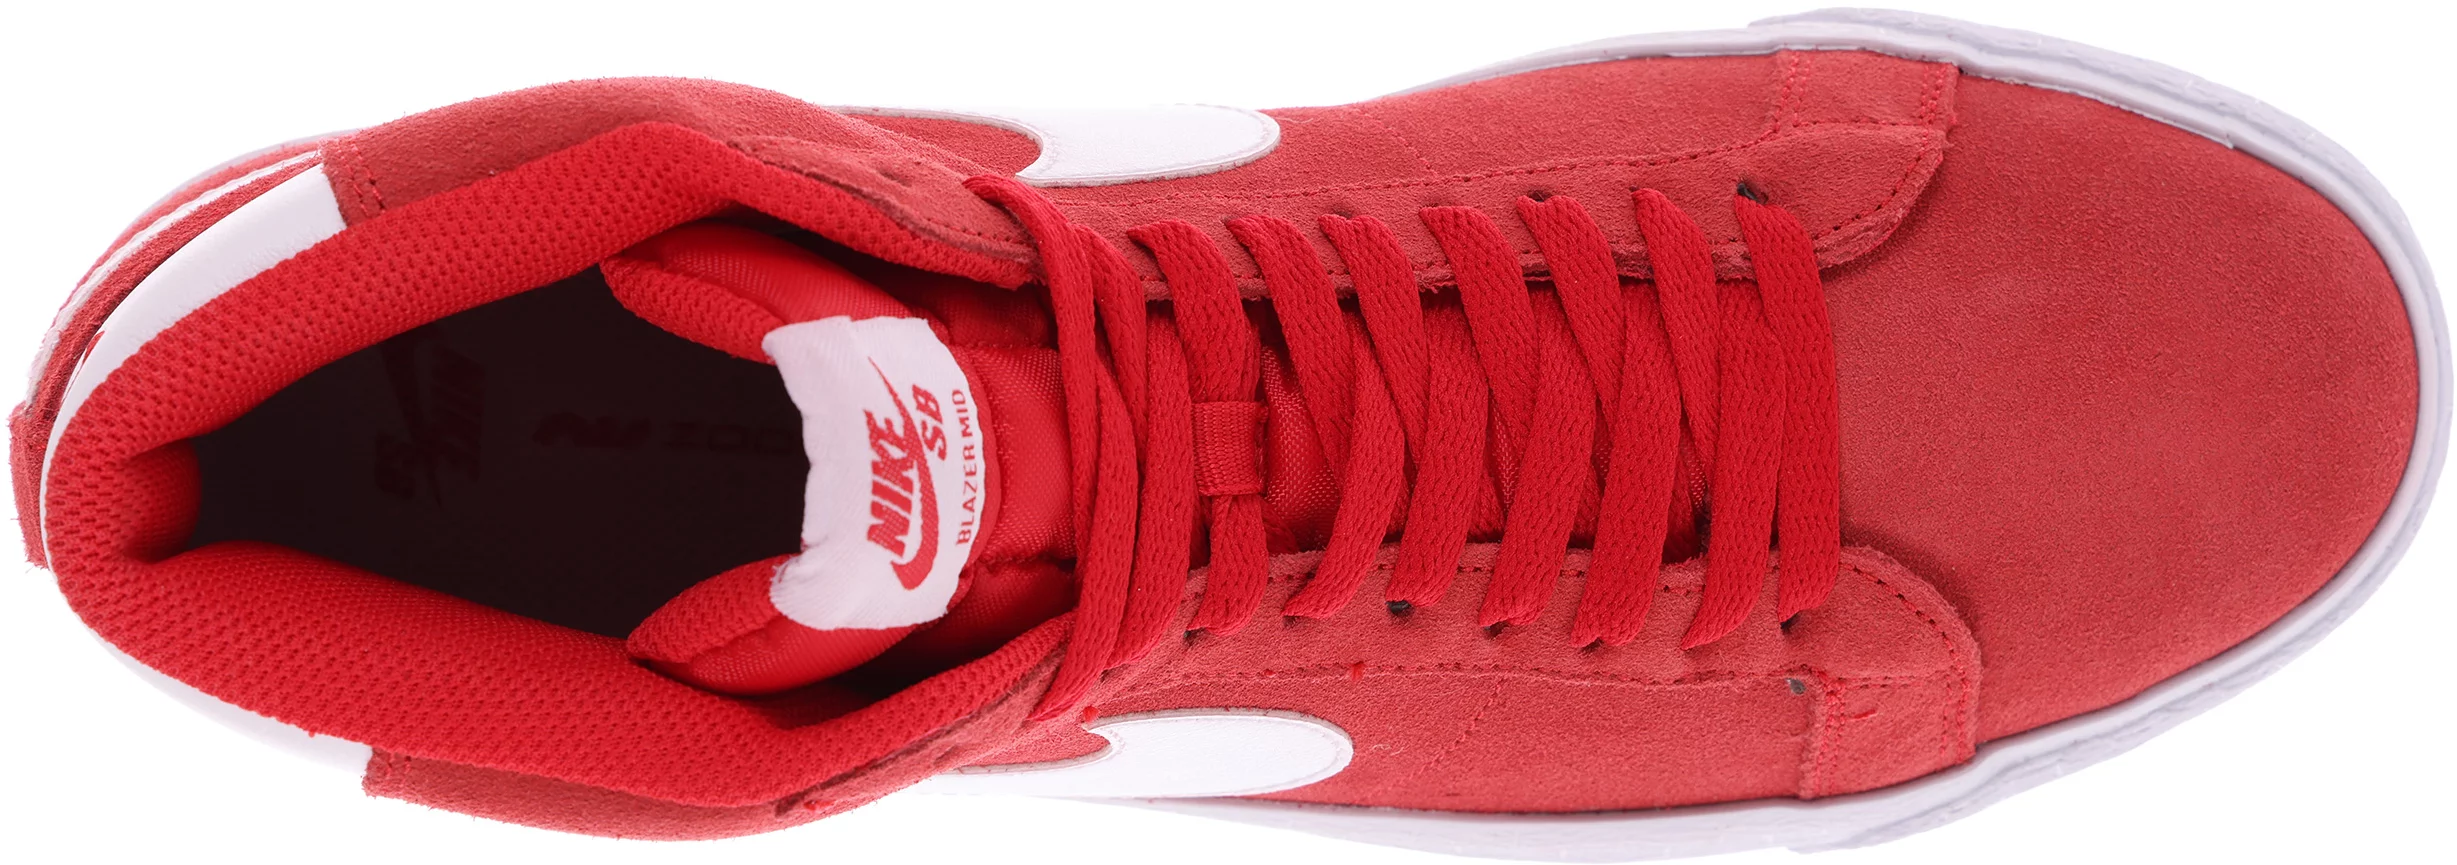 Nike SB Zoom Blazer Mid Skate Shoes - university red/white